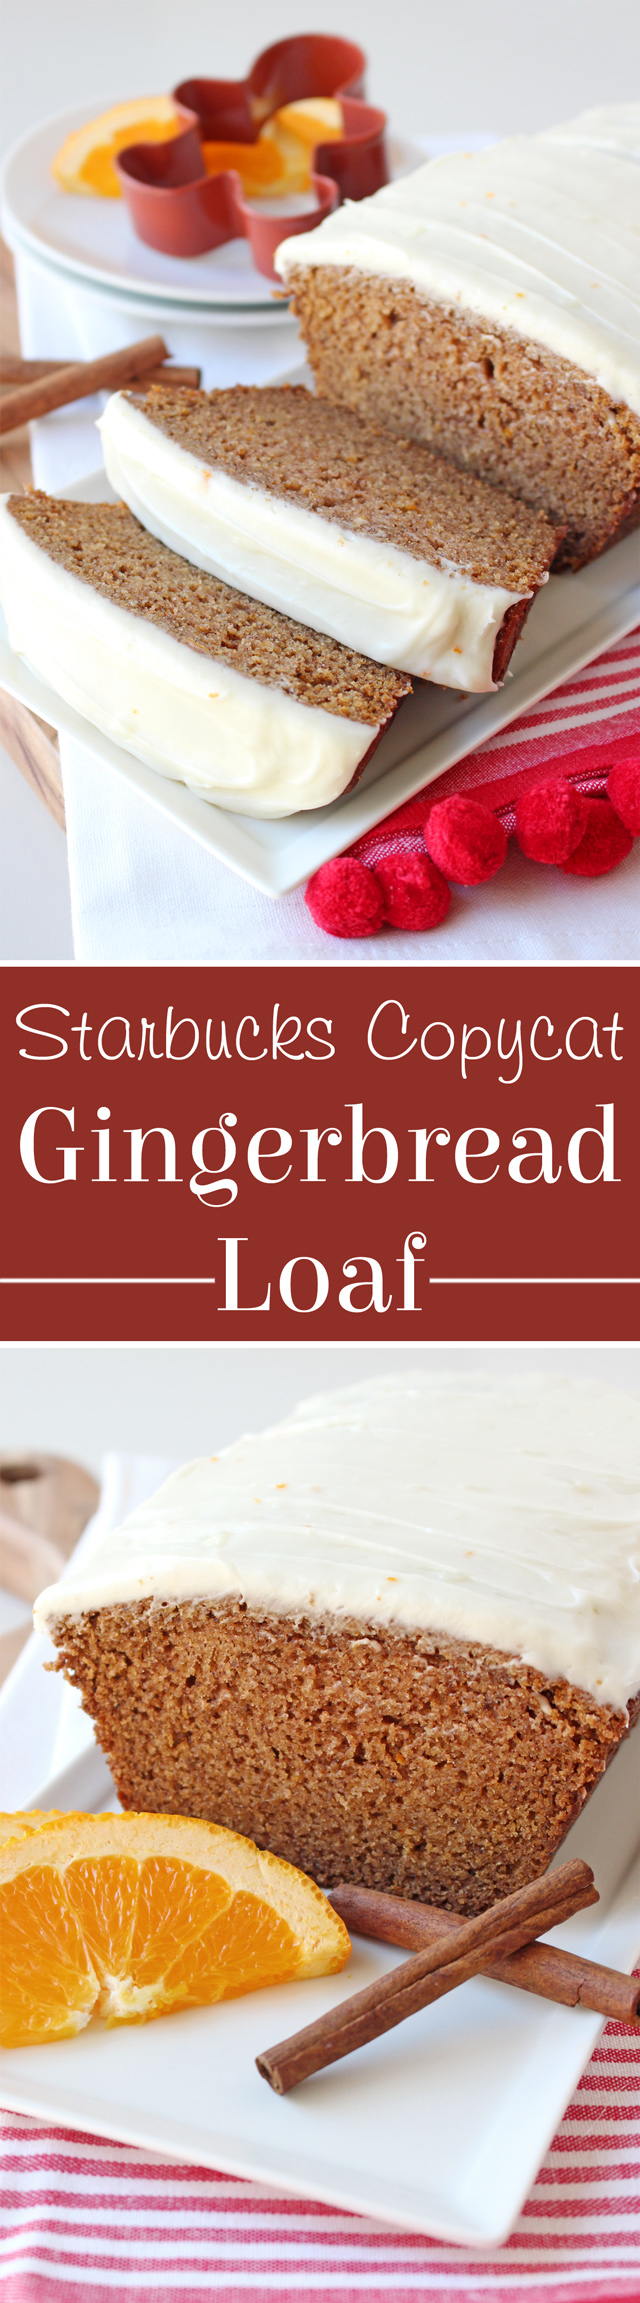 https://www.glorioustreats.com/wp-content/uploads/2018/12/Starbucks-Gingerbread-Loaf.jpg